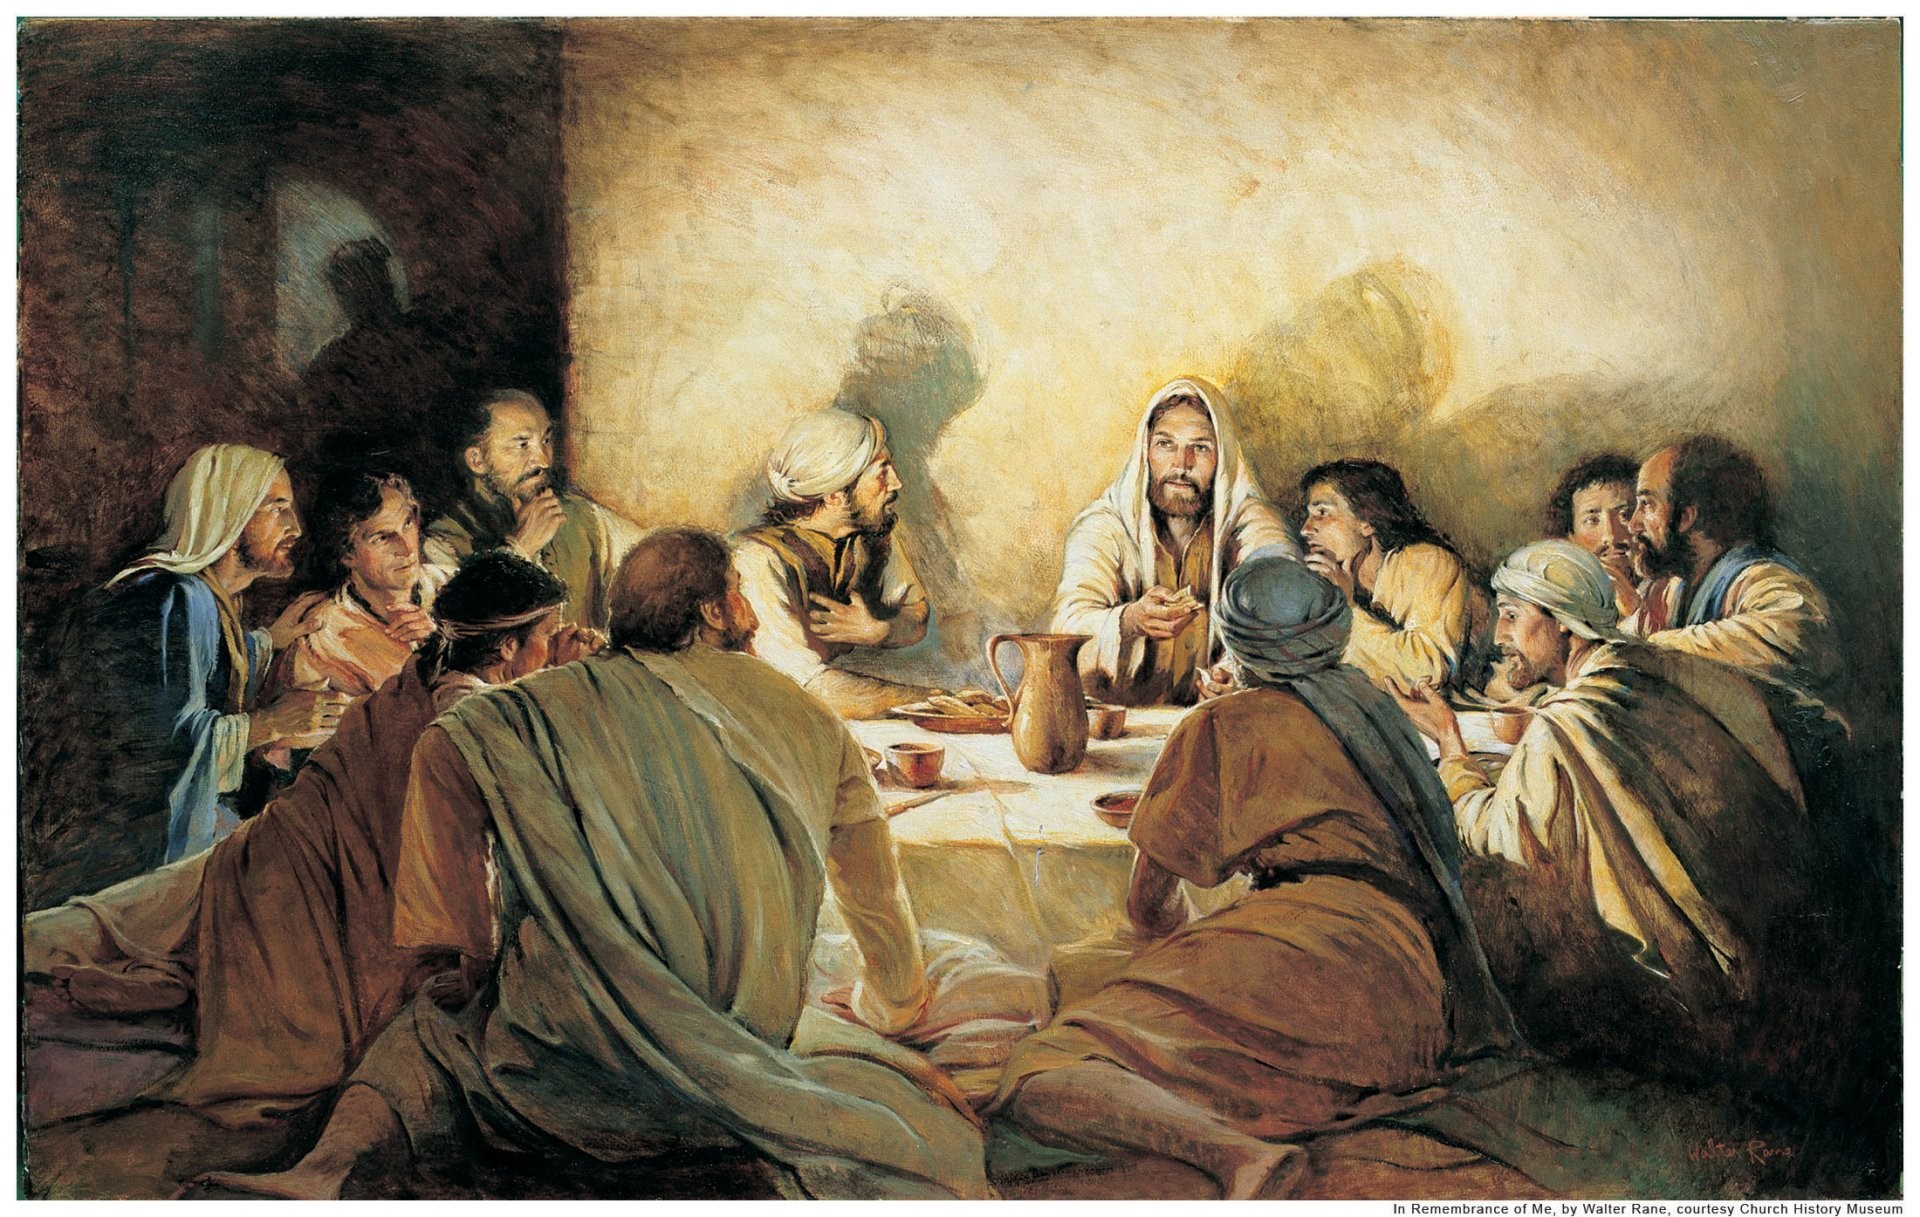 last supper jesus christ the last supper apostles find judas jesus bread wine wall light shadow